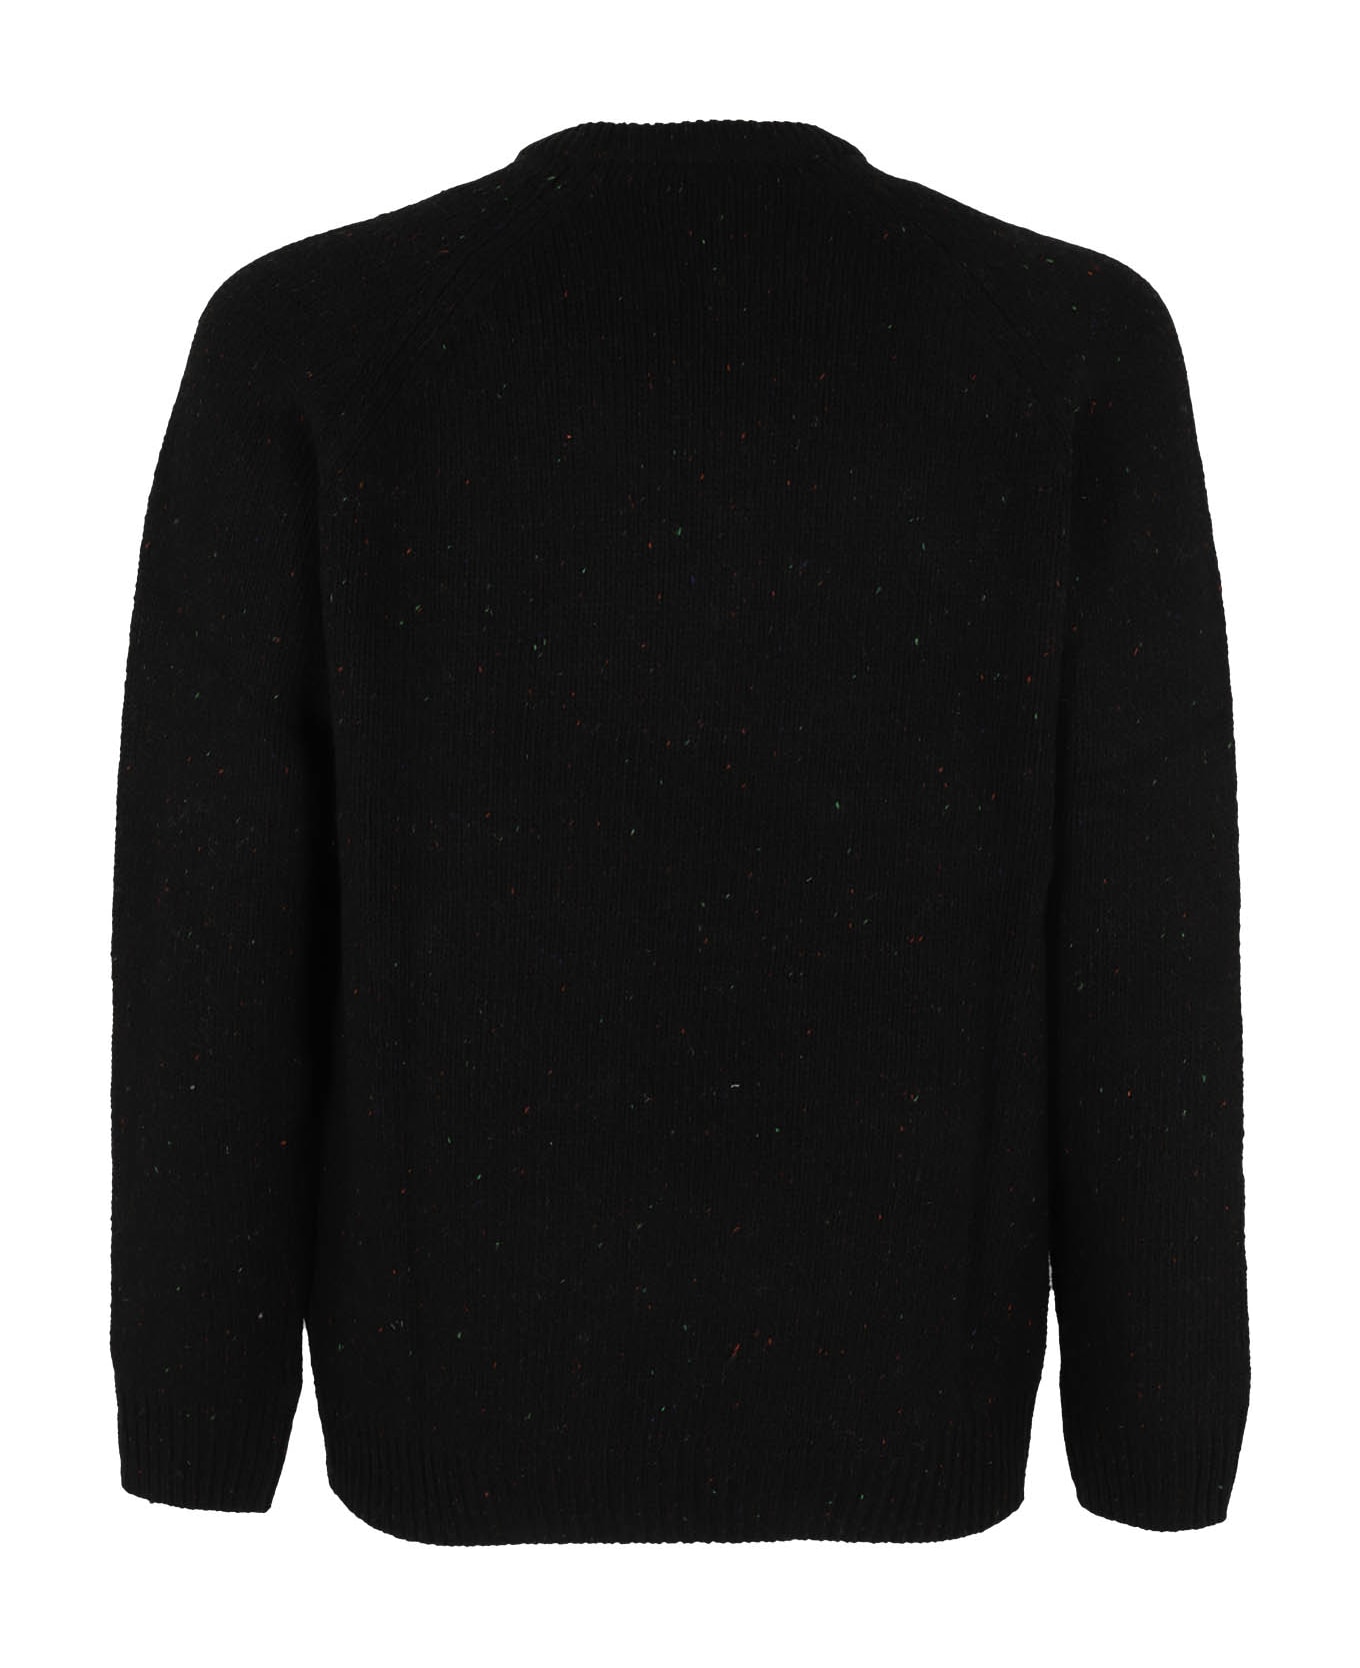 Carhartt Anglistic Sweater - Black